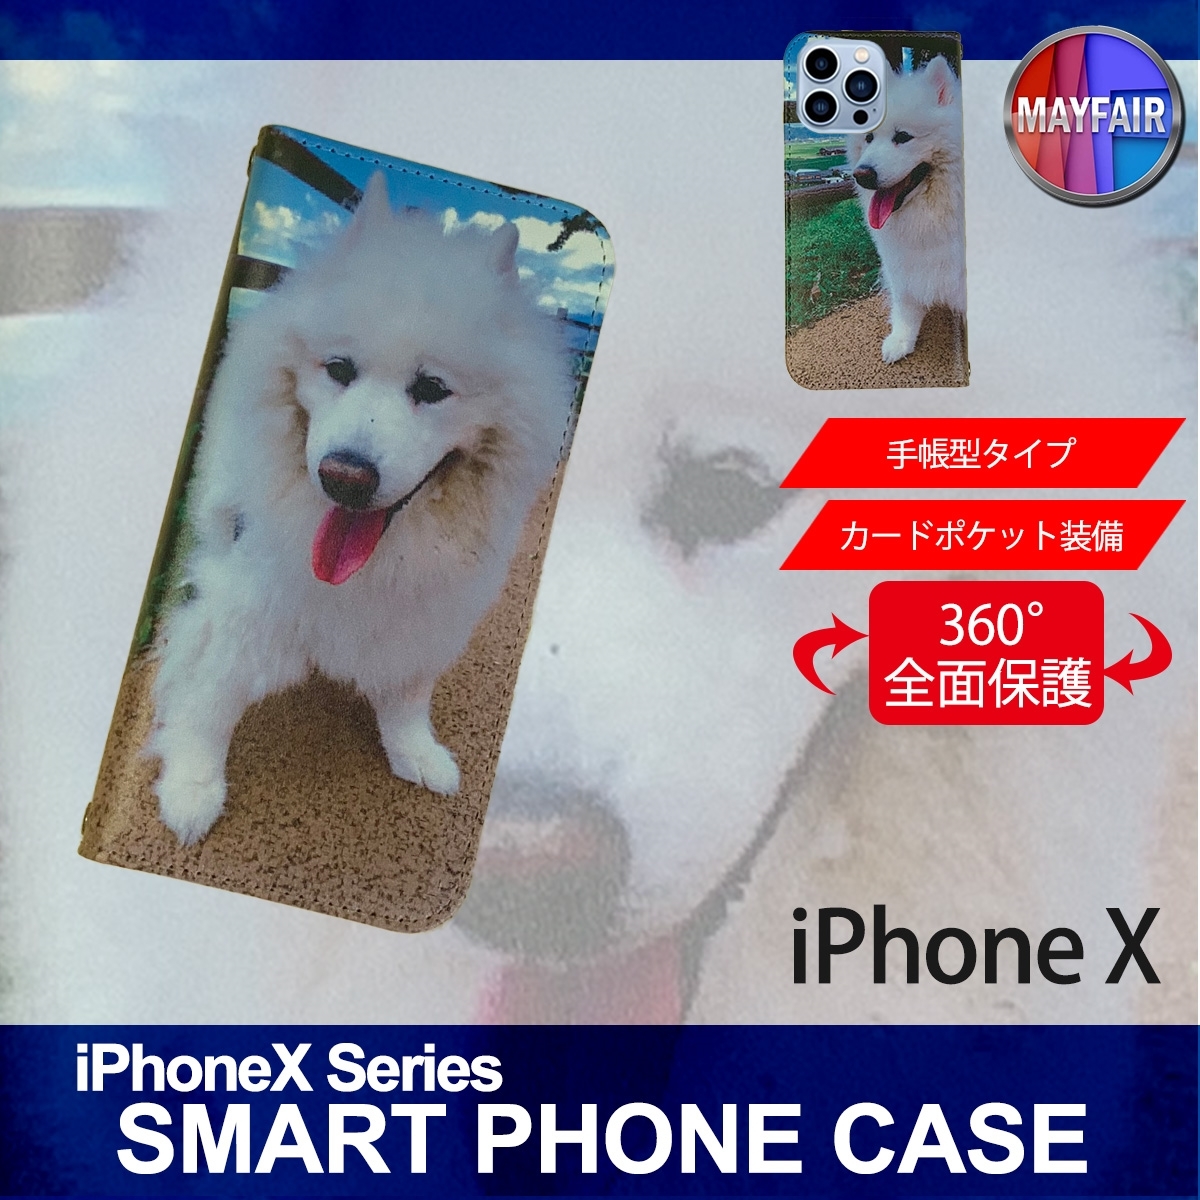 1】 iPhoneX 手帳型 アイフォン ケース スマホカバー PVC レザー 犬4